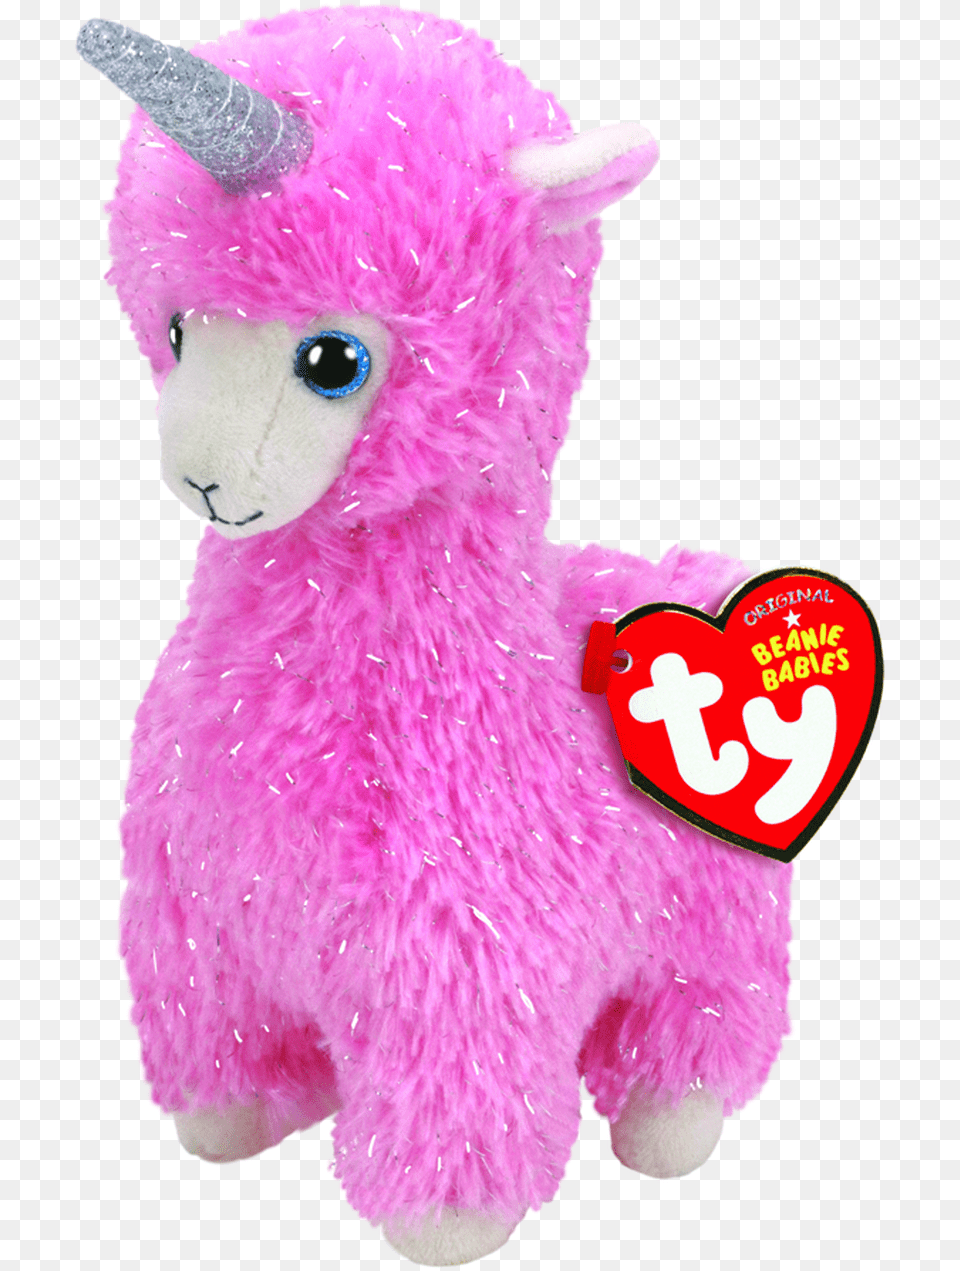 Beanie Boo Babies Small Lana Llama Beanie Boo Llama, Toy, Plush Png Image